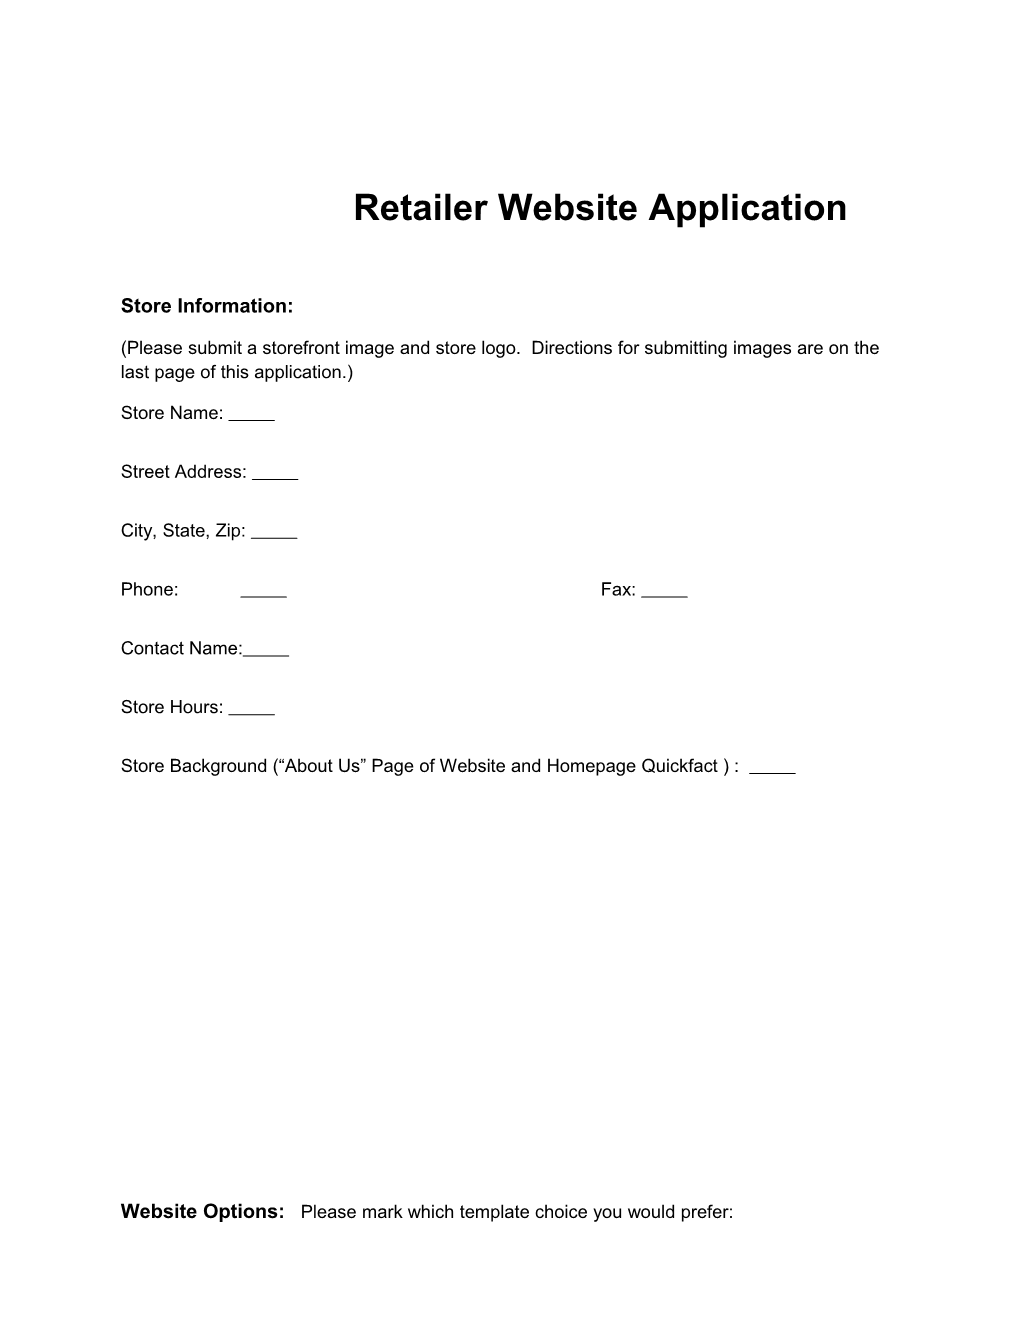 Retailer Website Application